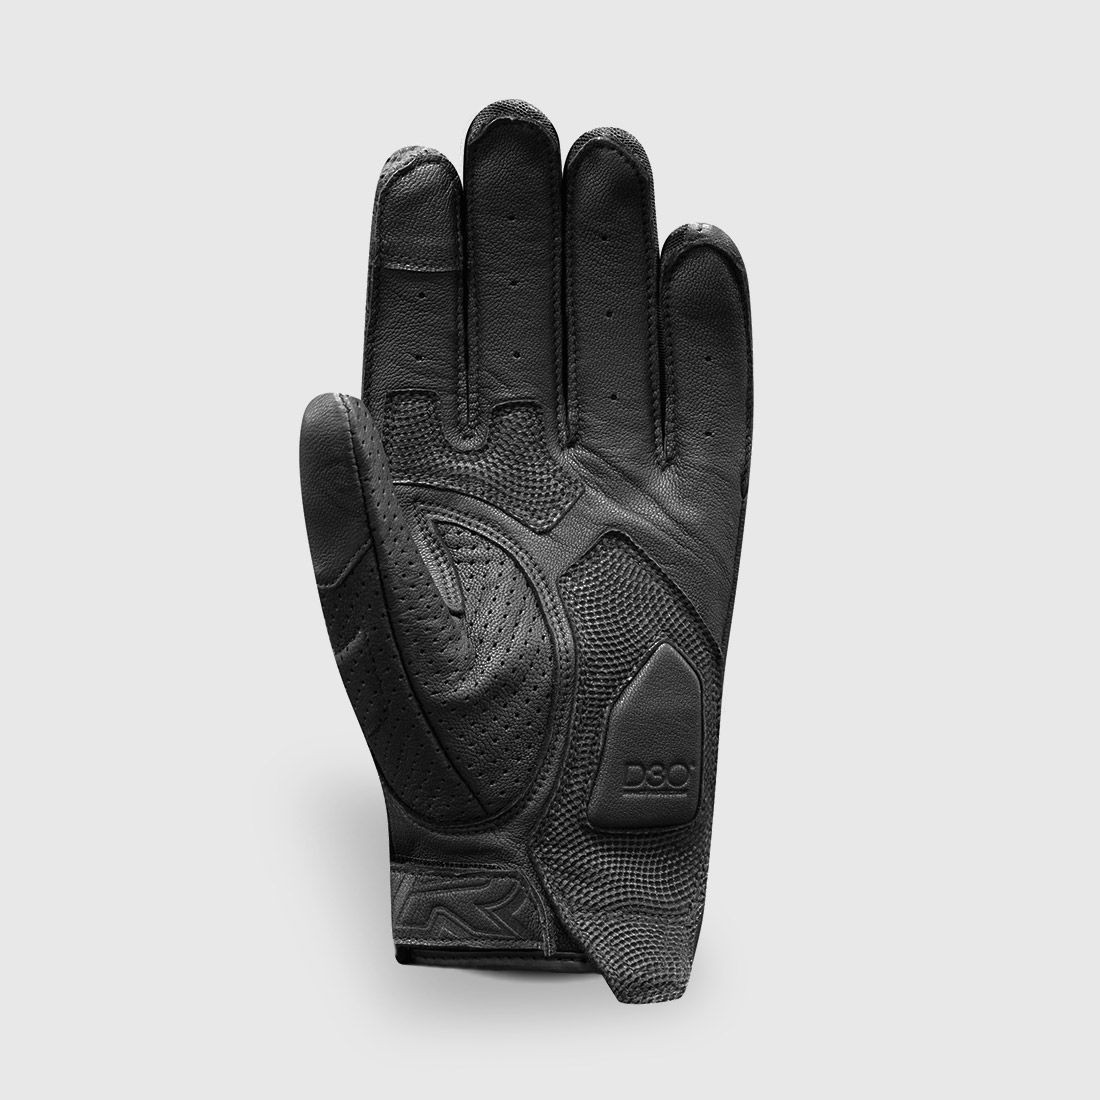 META 4 - Motorcycle gloves